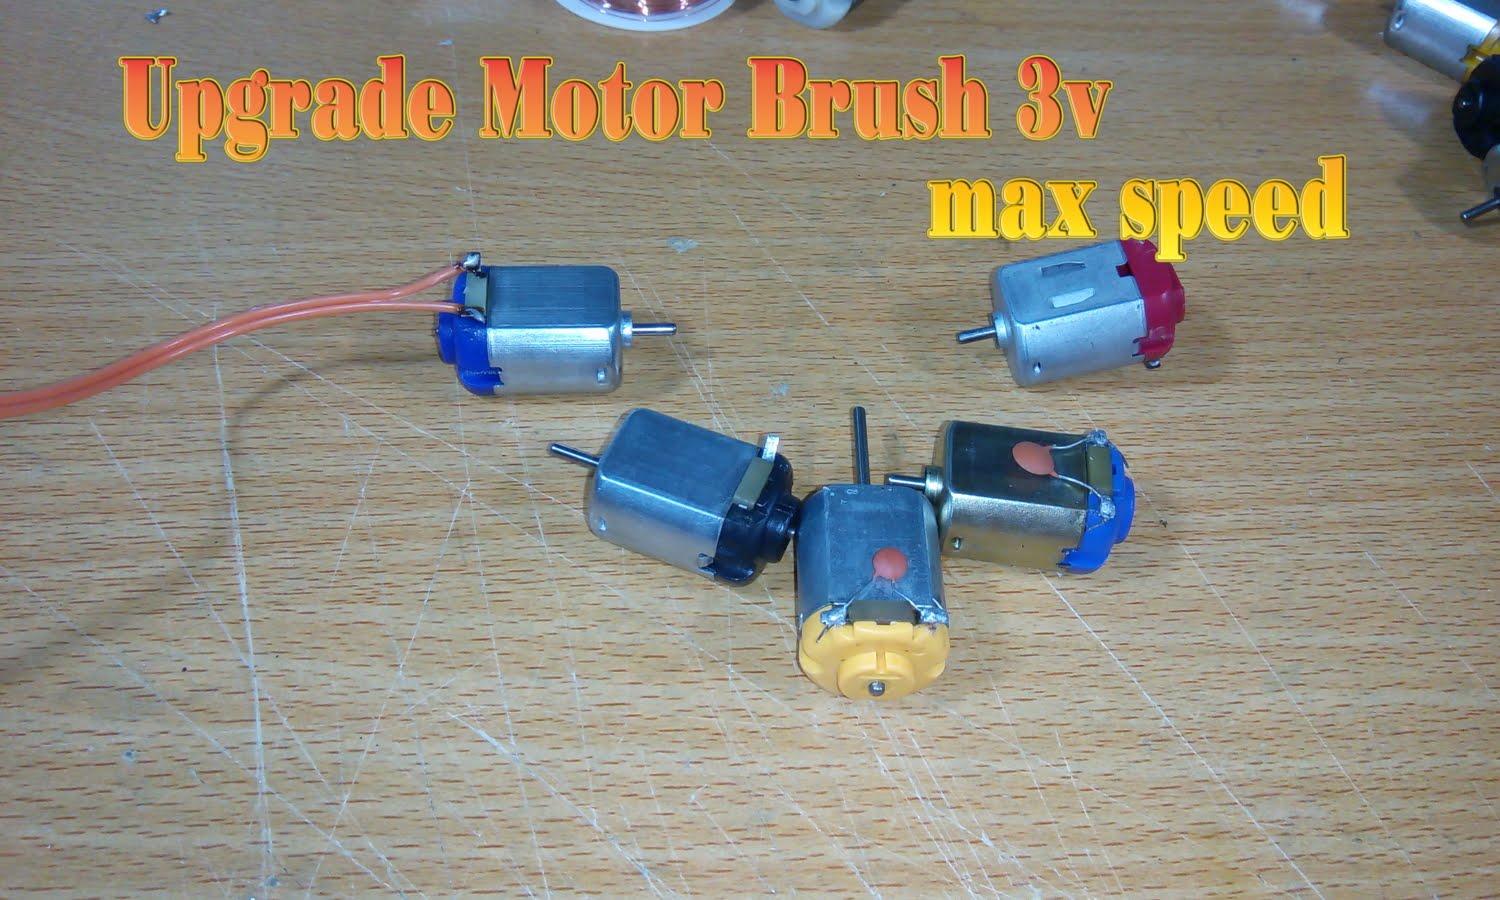 How to make upgrade Motor Brush 3v max speed